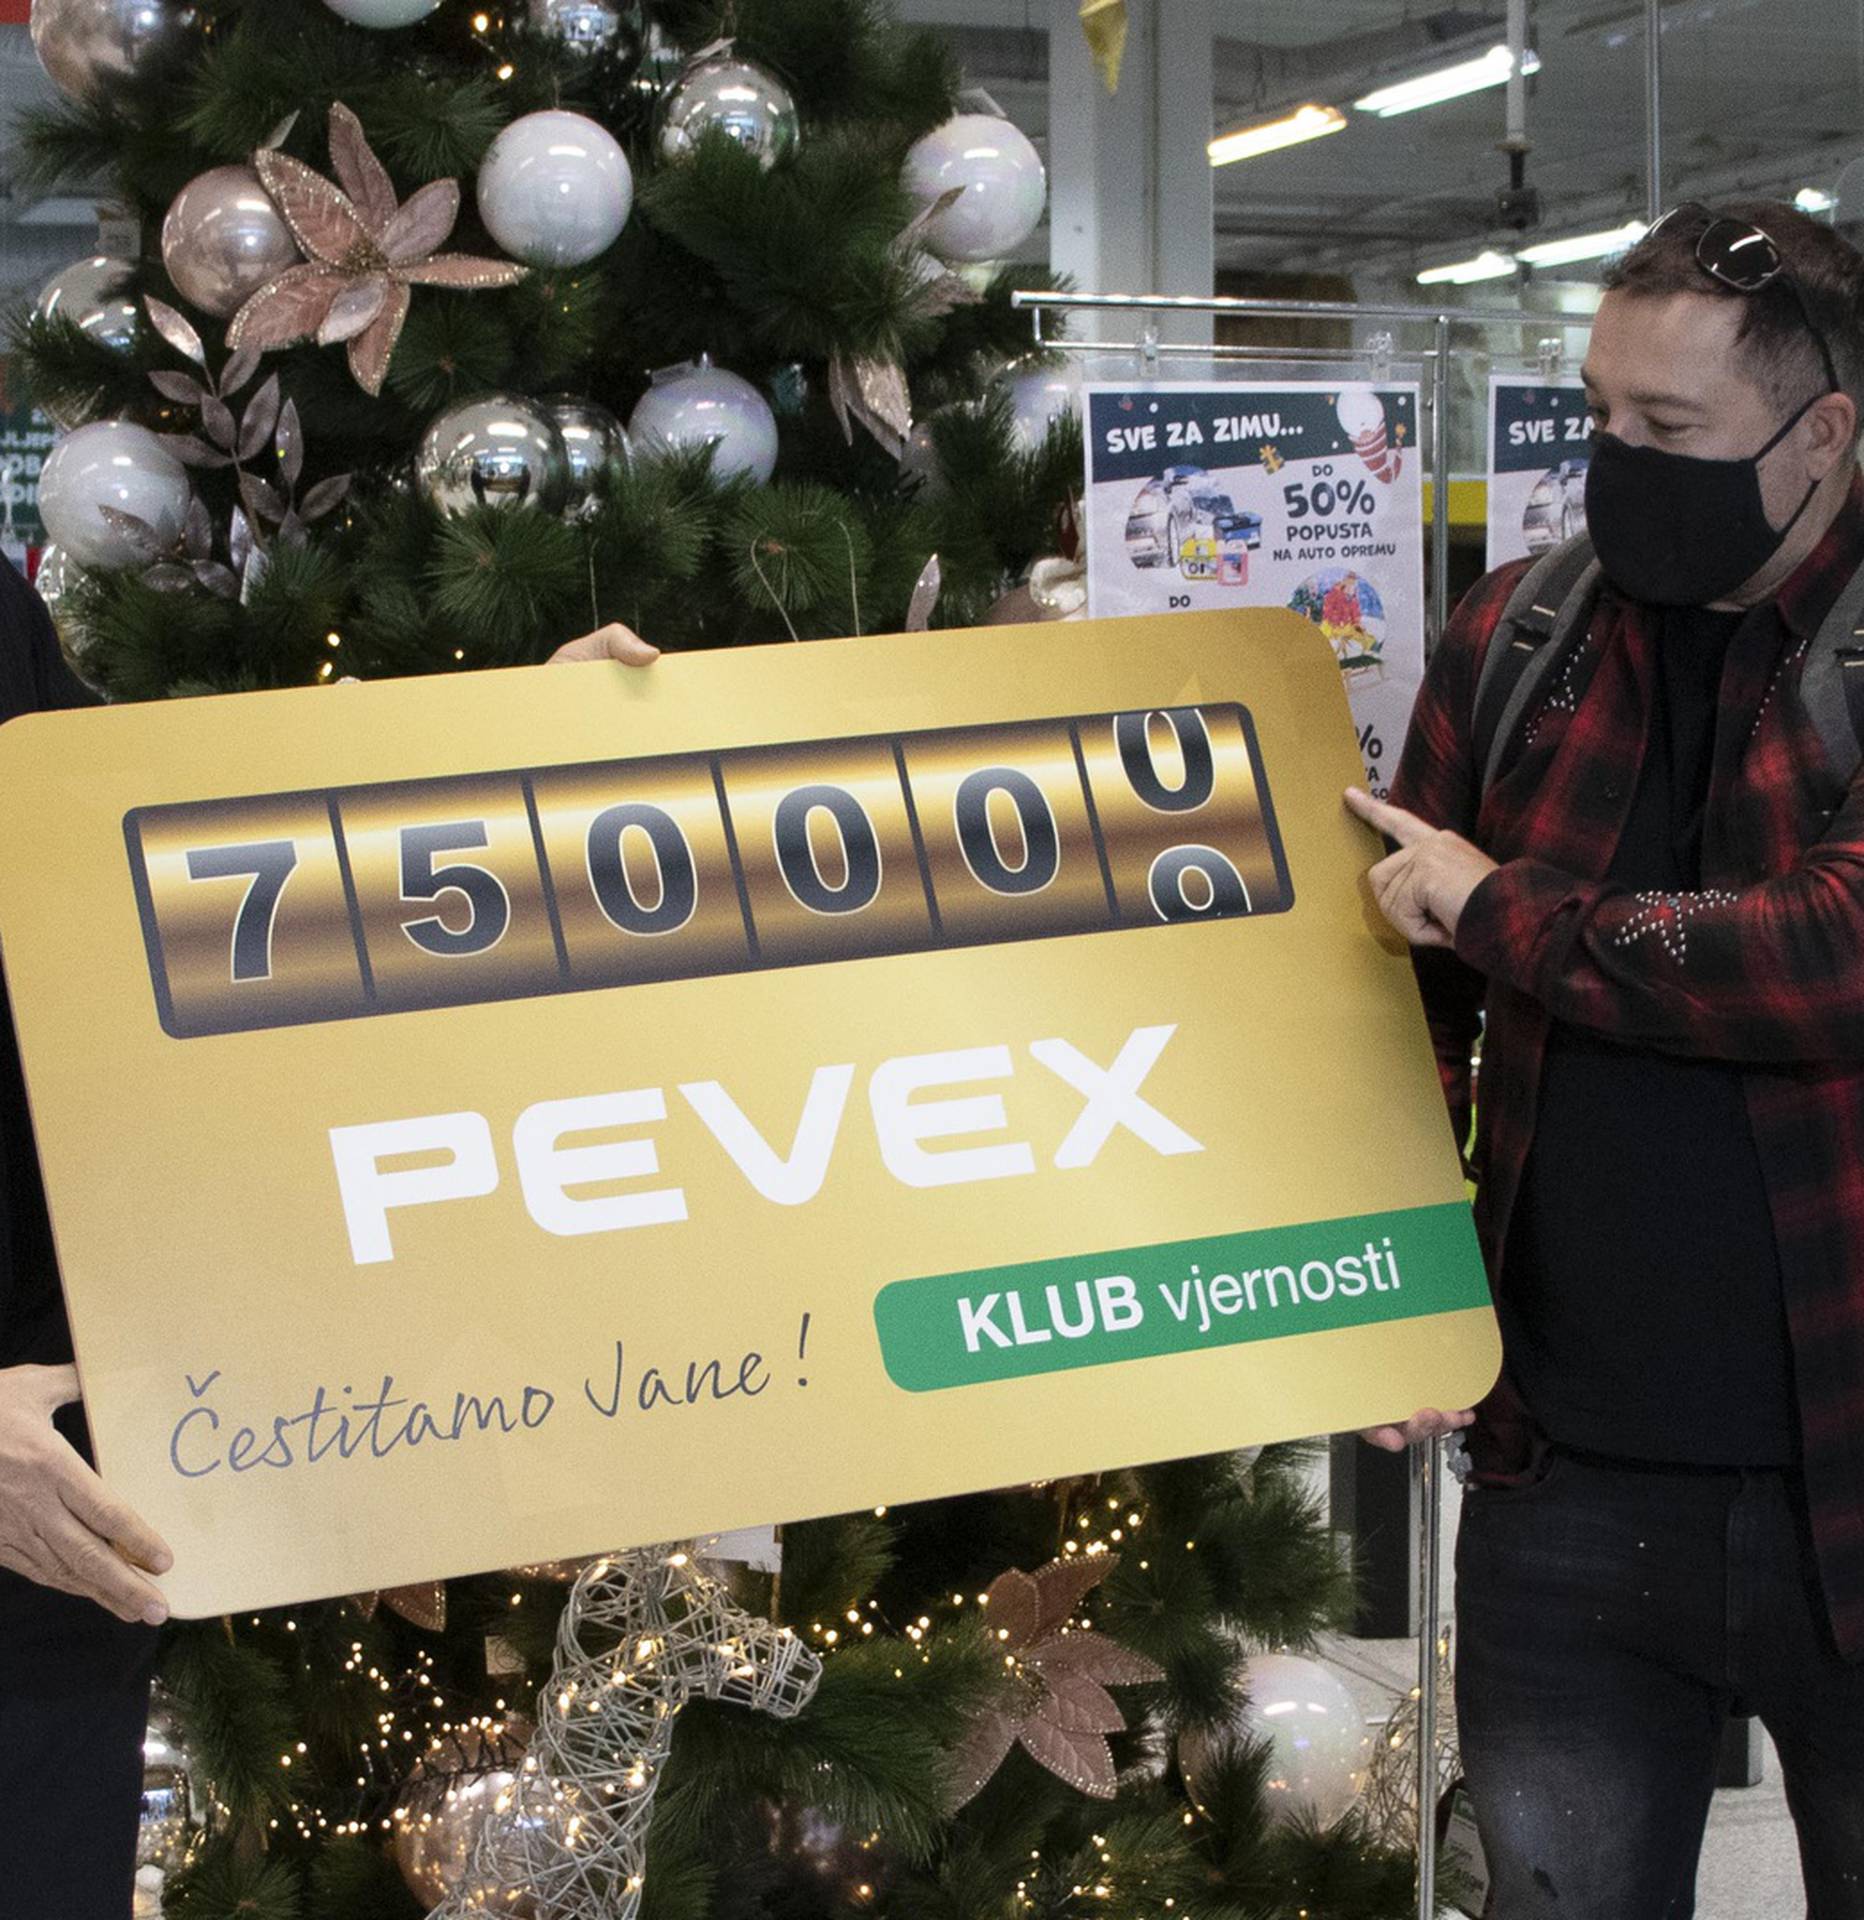 PEVEX nagradio 750.000 člana kluba vjernosti